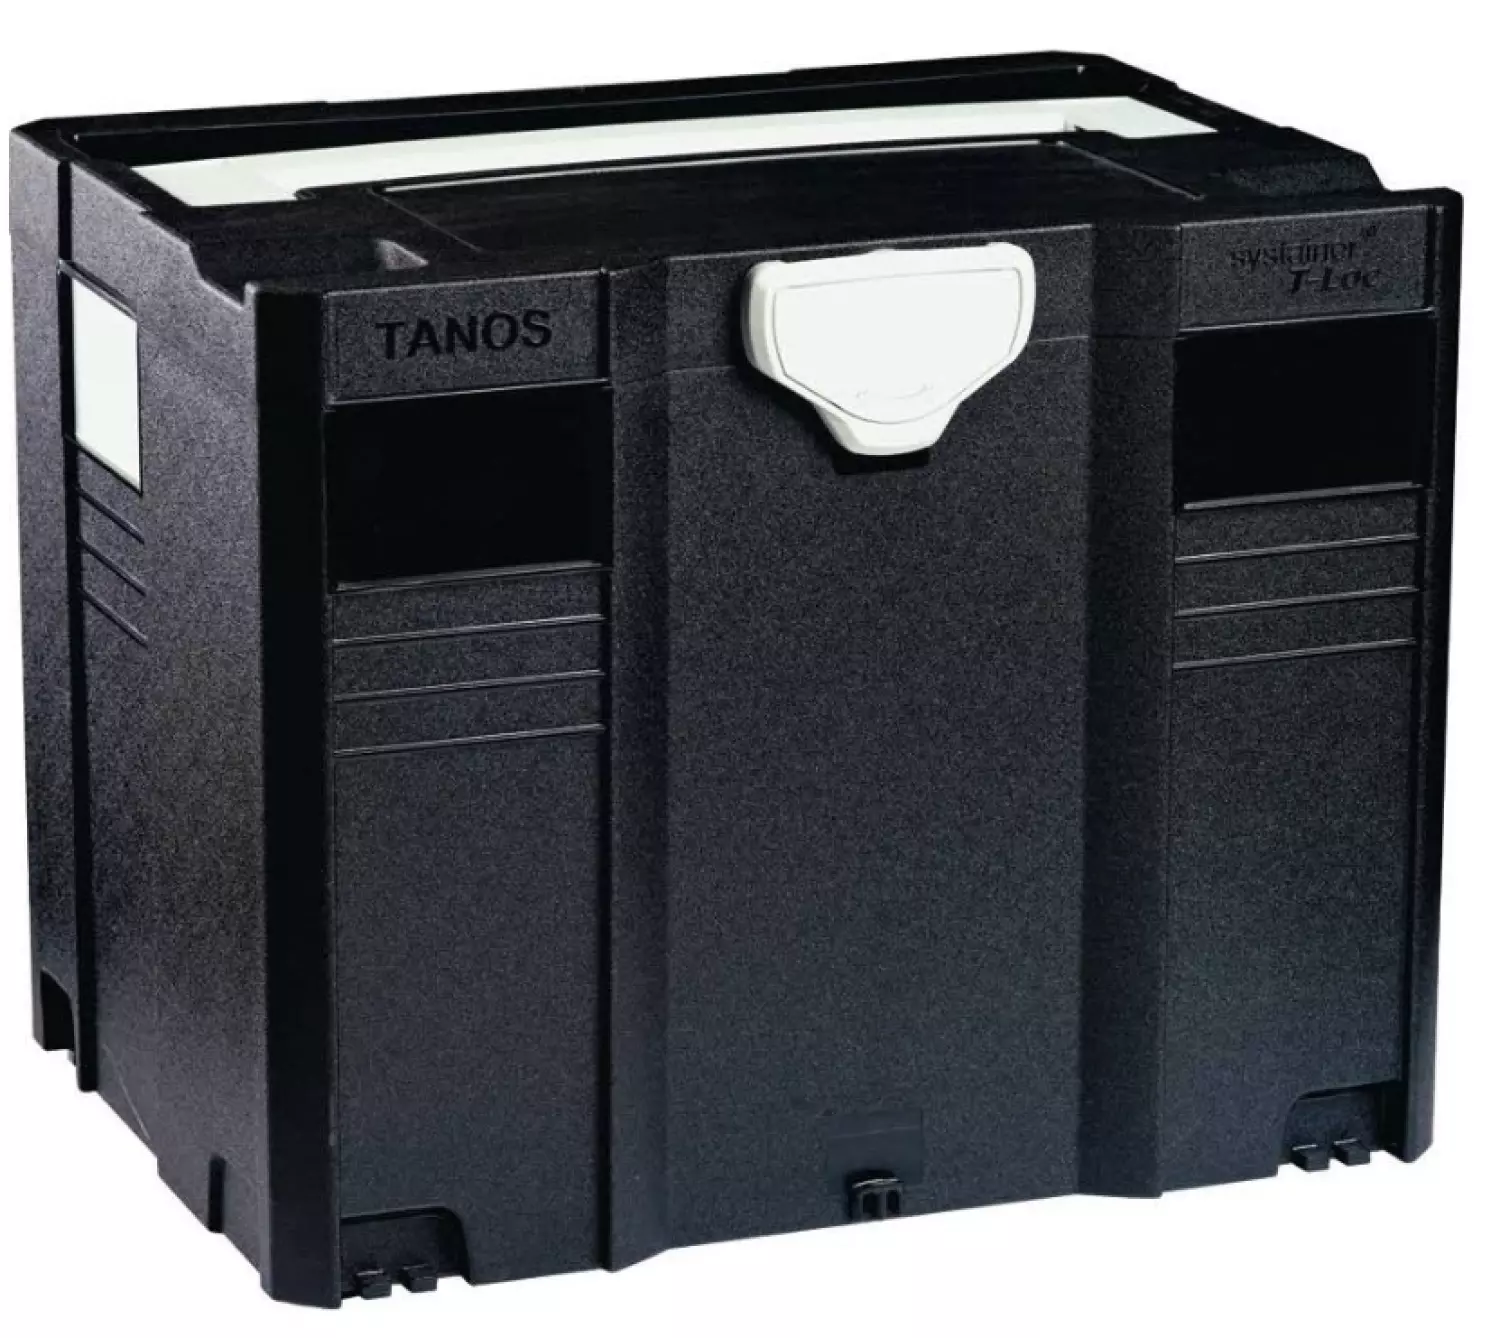 Panasonic TOOLBOX4-IN systainer met inleg voor EY4550,EY45A2,EY46A2, EY46A5 en voor combi-sets-image